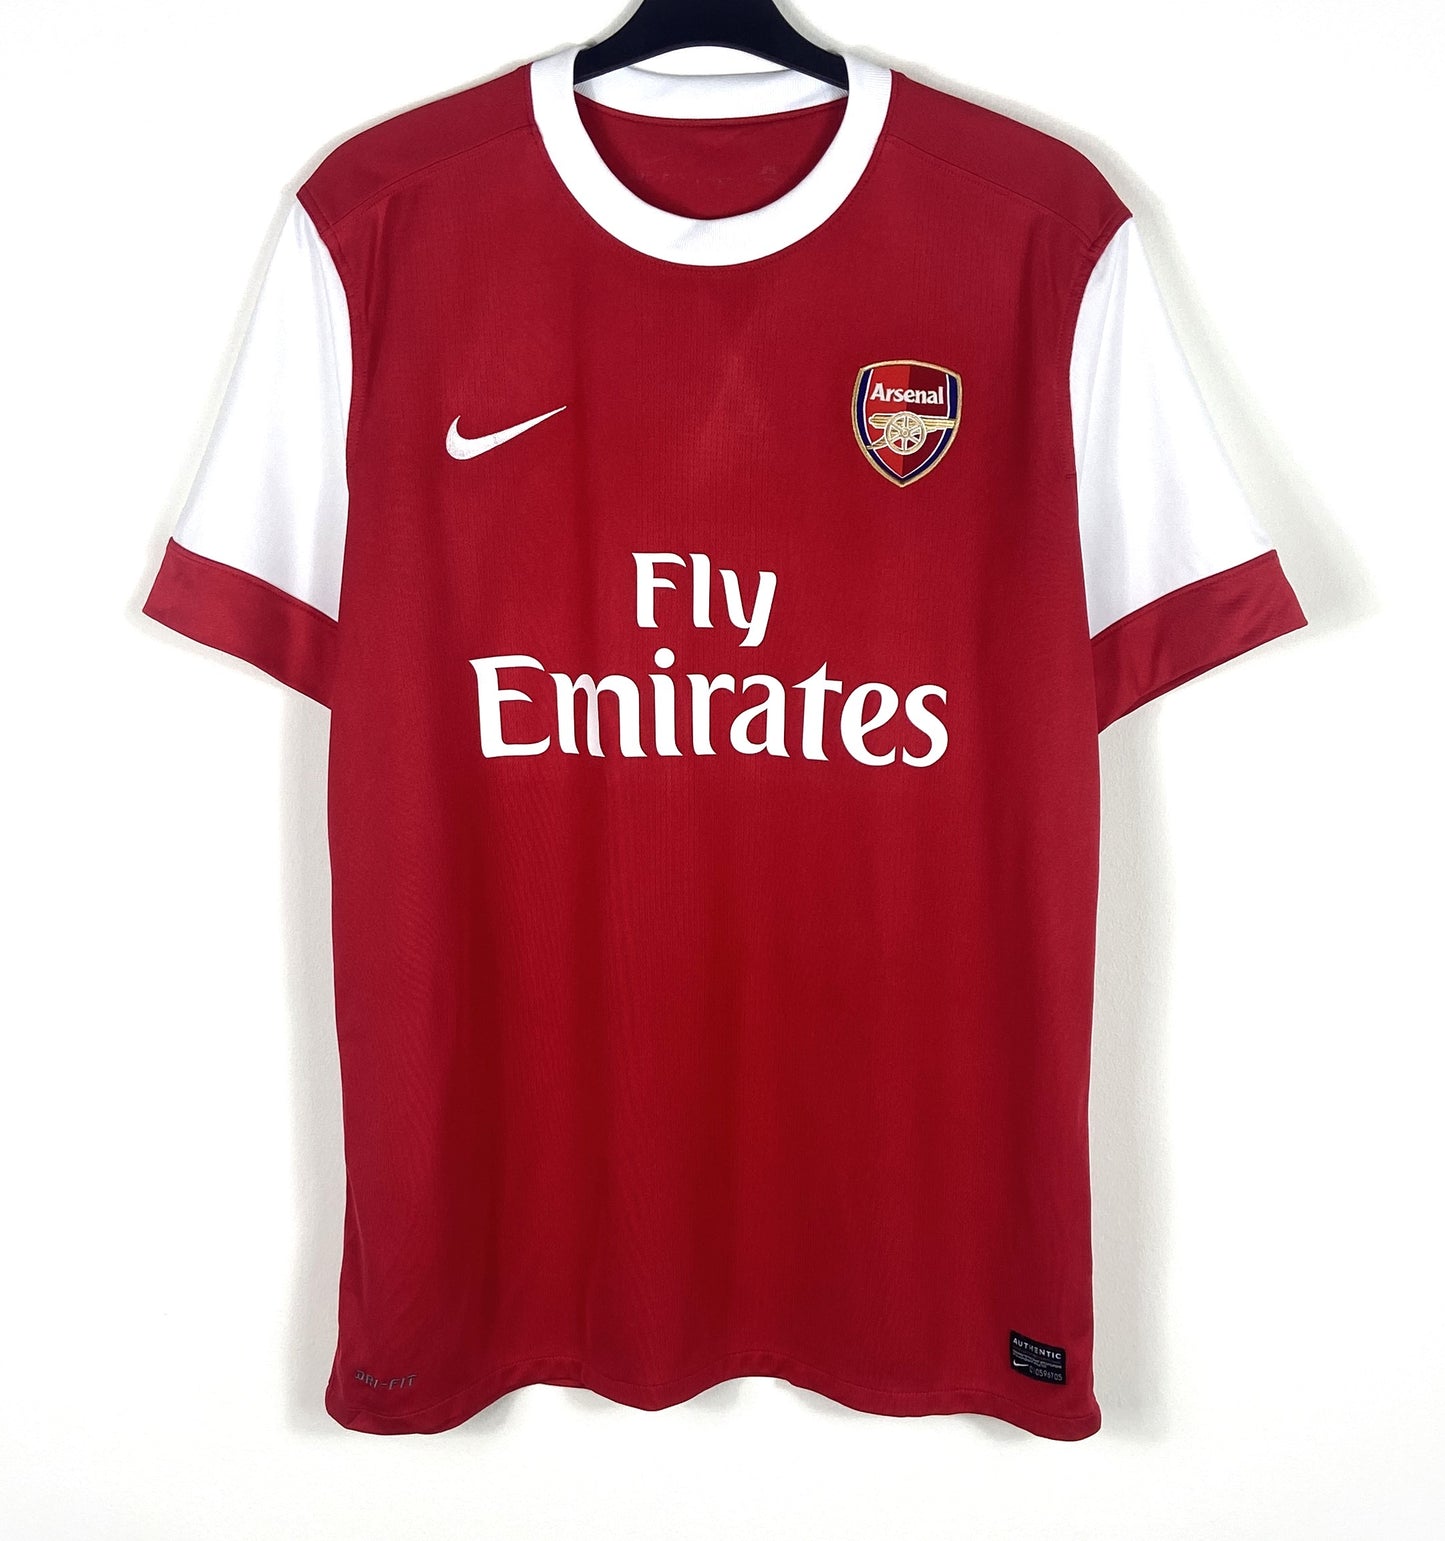 2010 2011 Arsenal Nike Home Football Shirt V. PERSIE 10 Men's Large